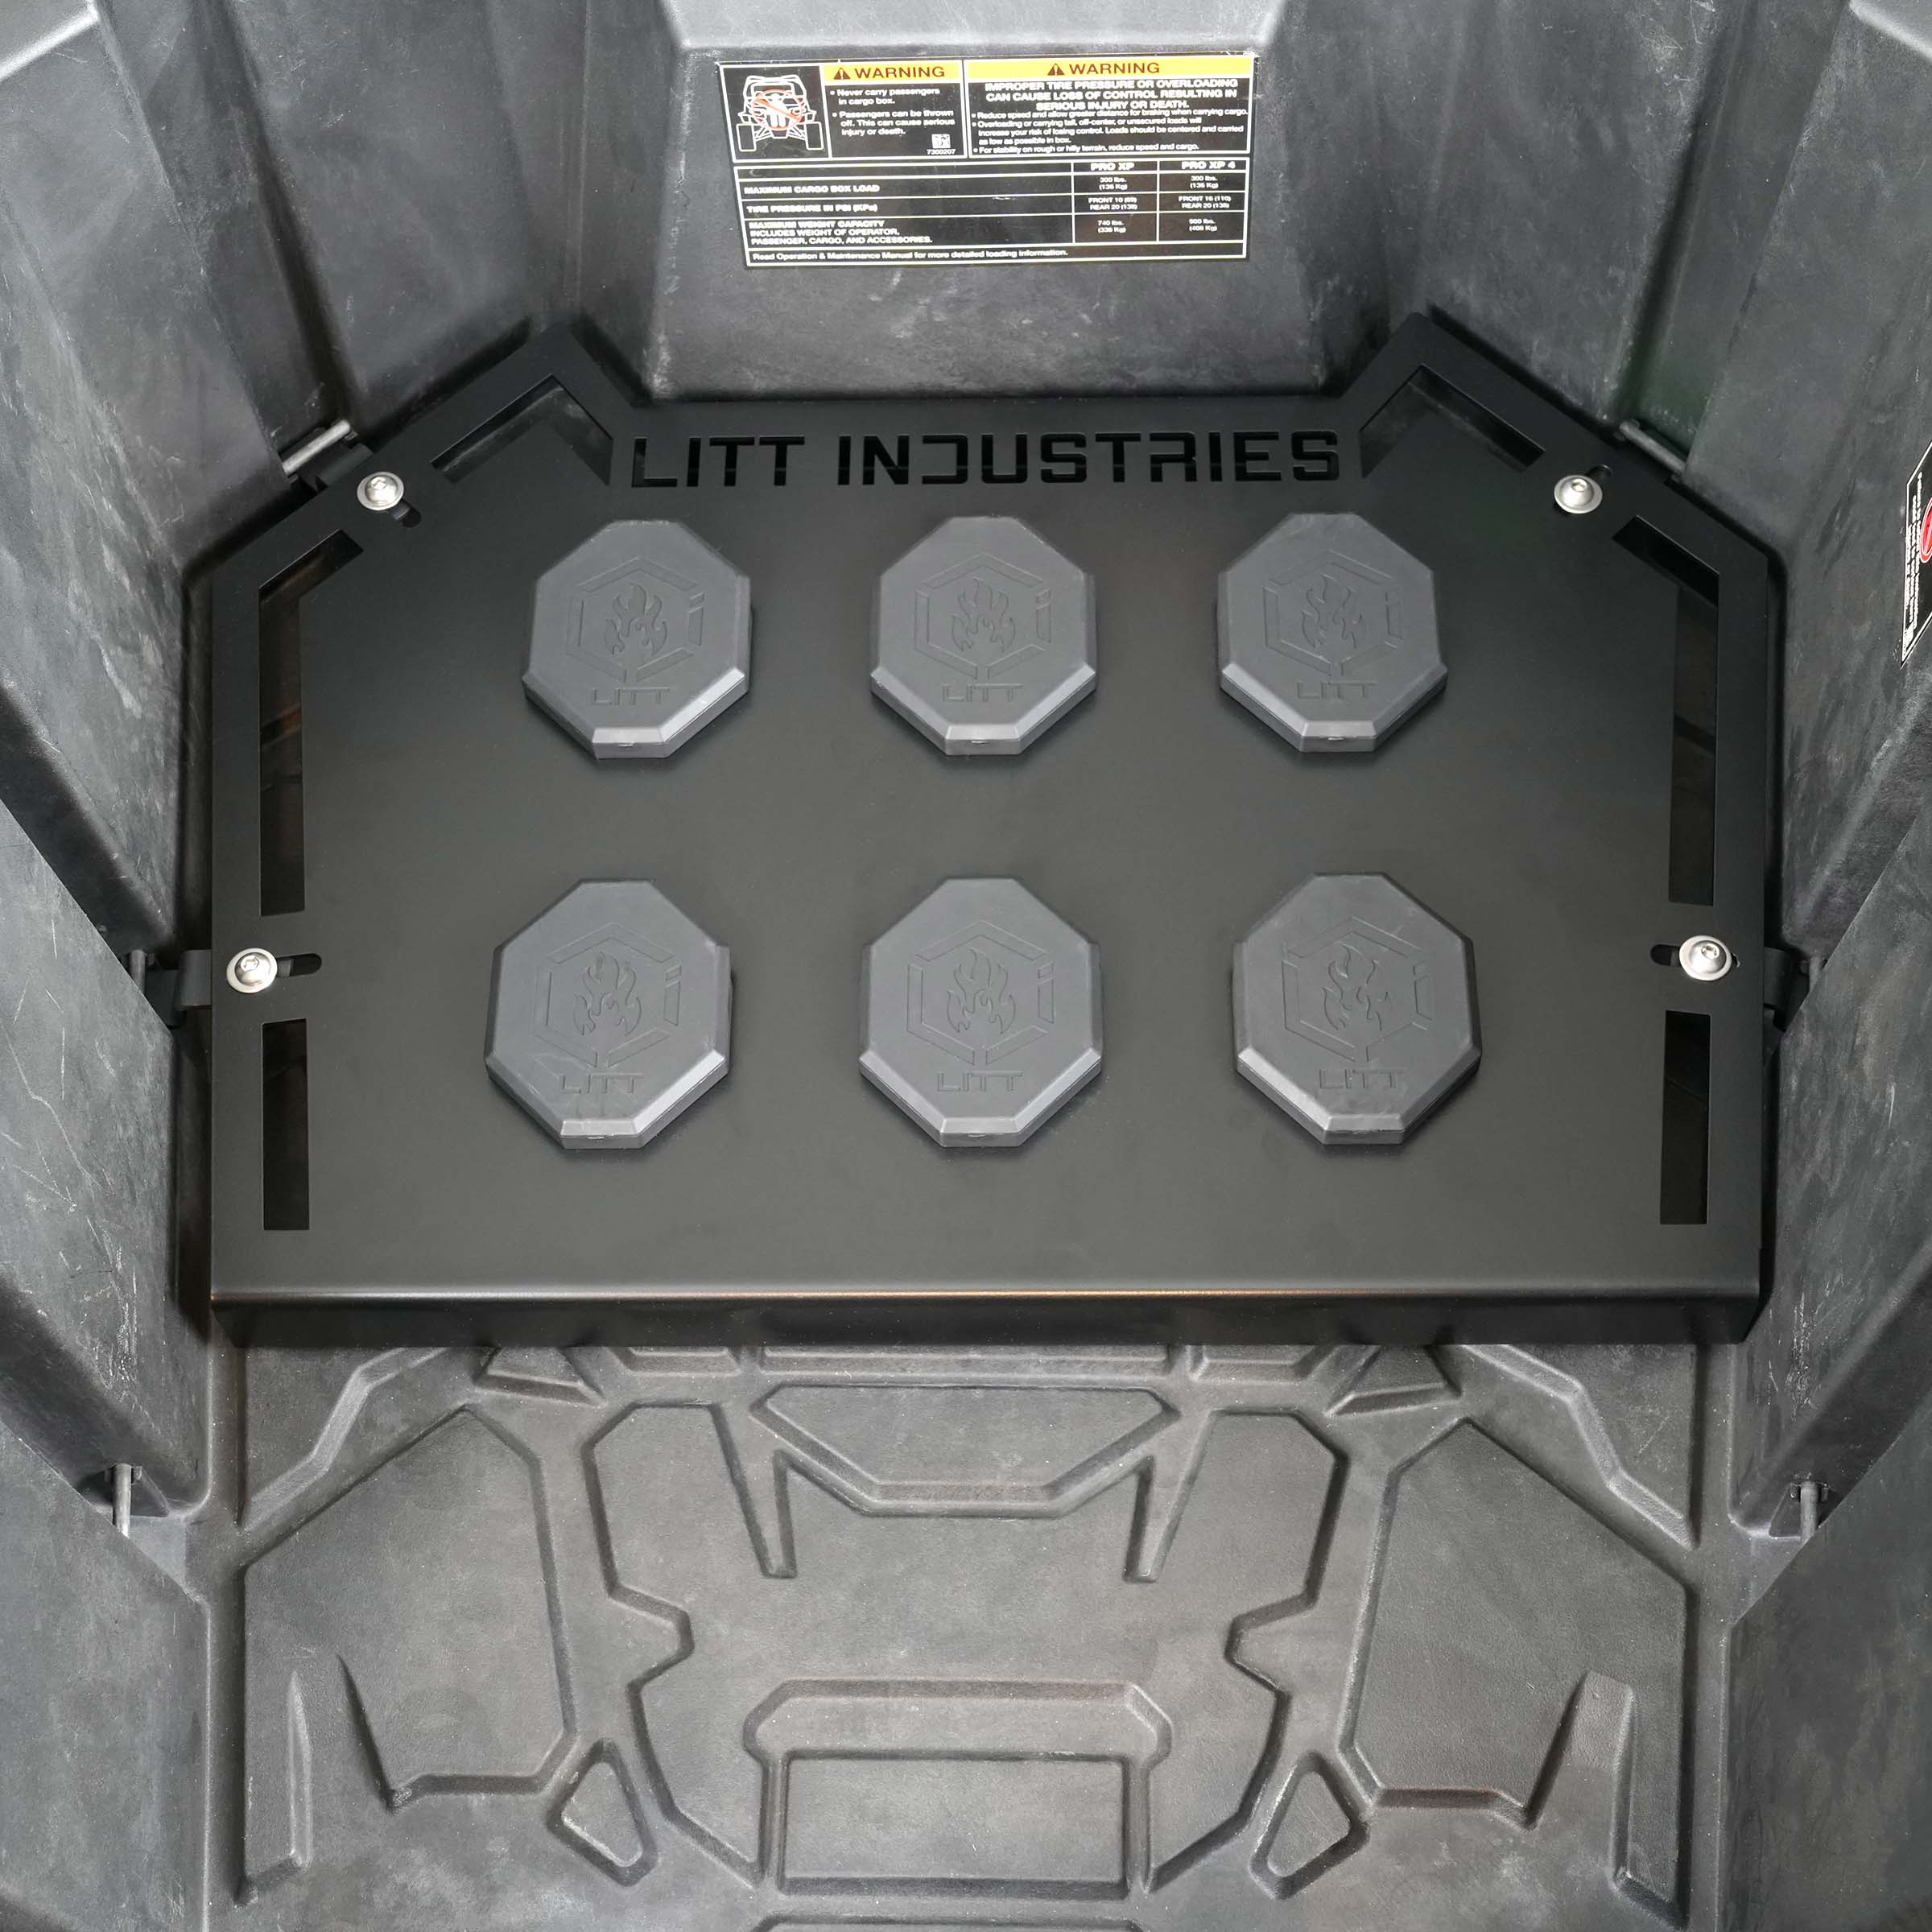 Litt Industries heavy duty ryobi packout mount for polaris rzr pro xp the best toolbox mount on the market